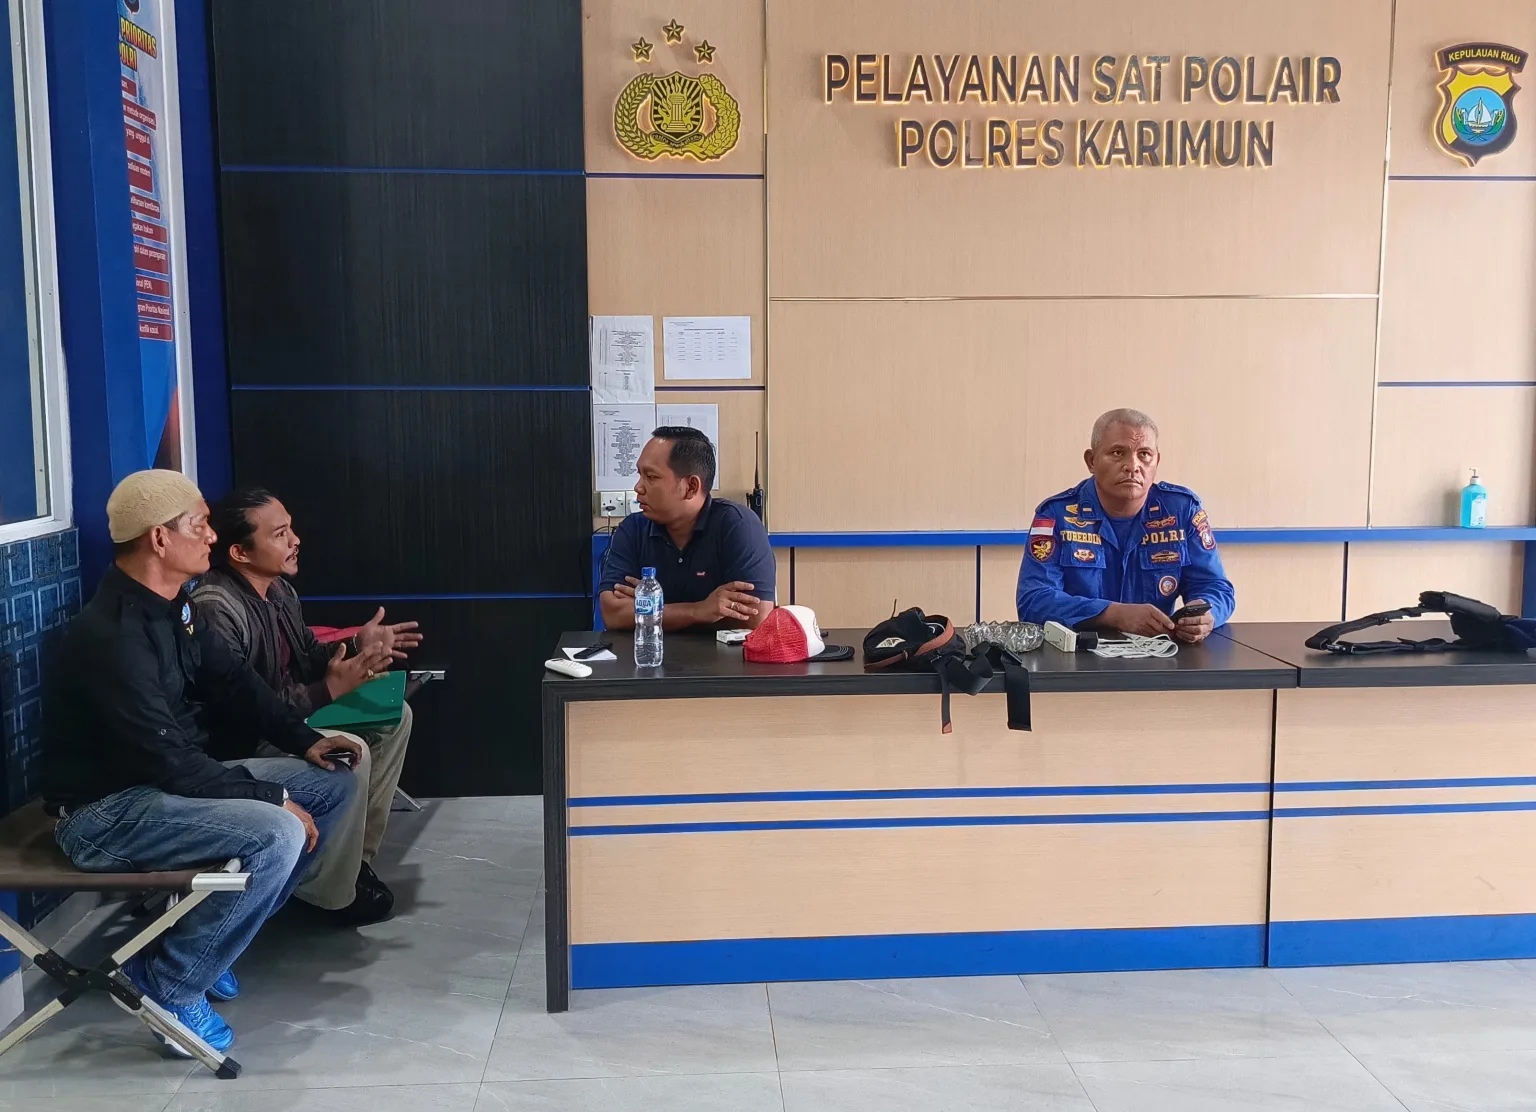 Ketua Ormas KPK, Mardana Surya Darma melaporkan izin aktivitas tambang pasir laut ke Satpolairud Polres Karimun | Foto: Ami